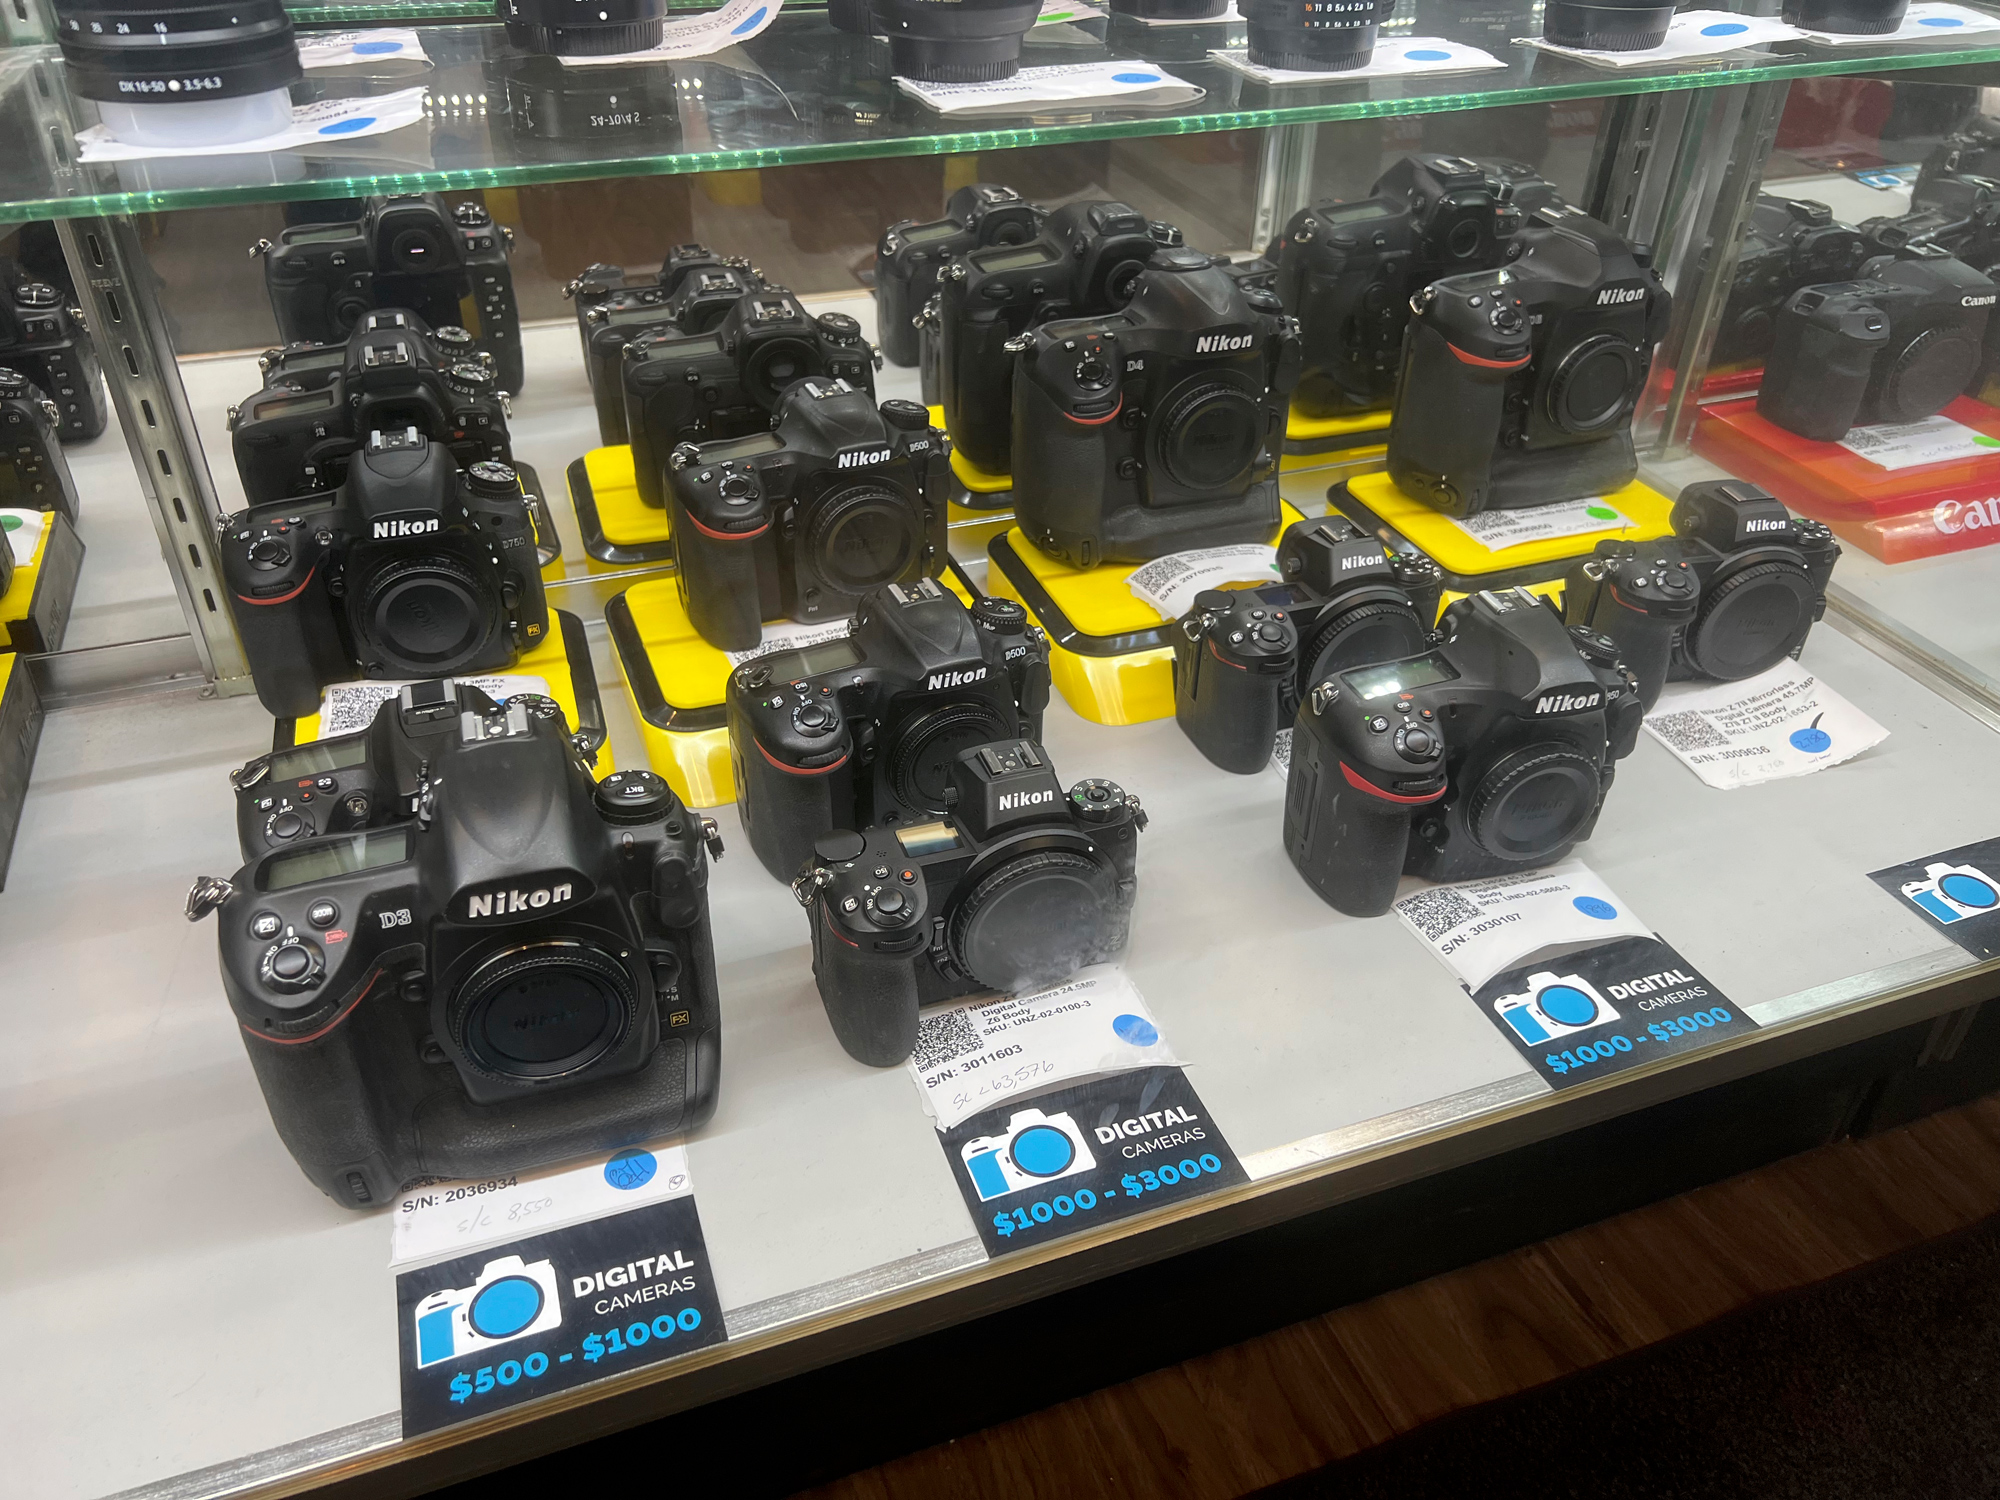 How about a digital Nikon? Plenty of them too.